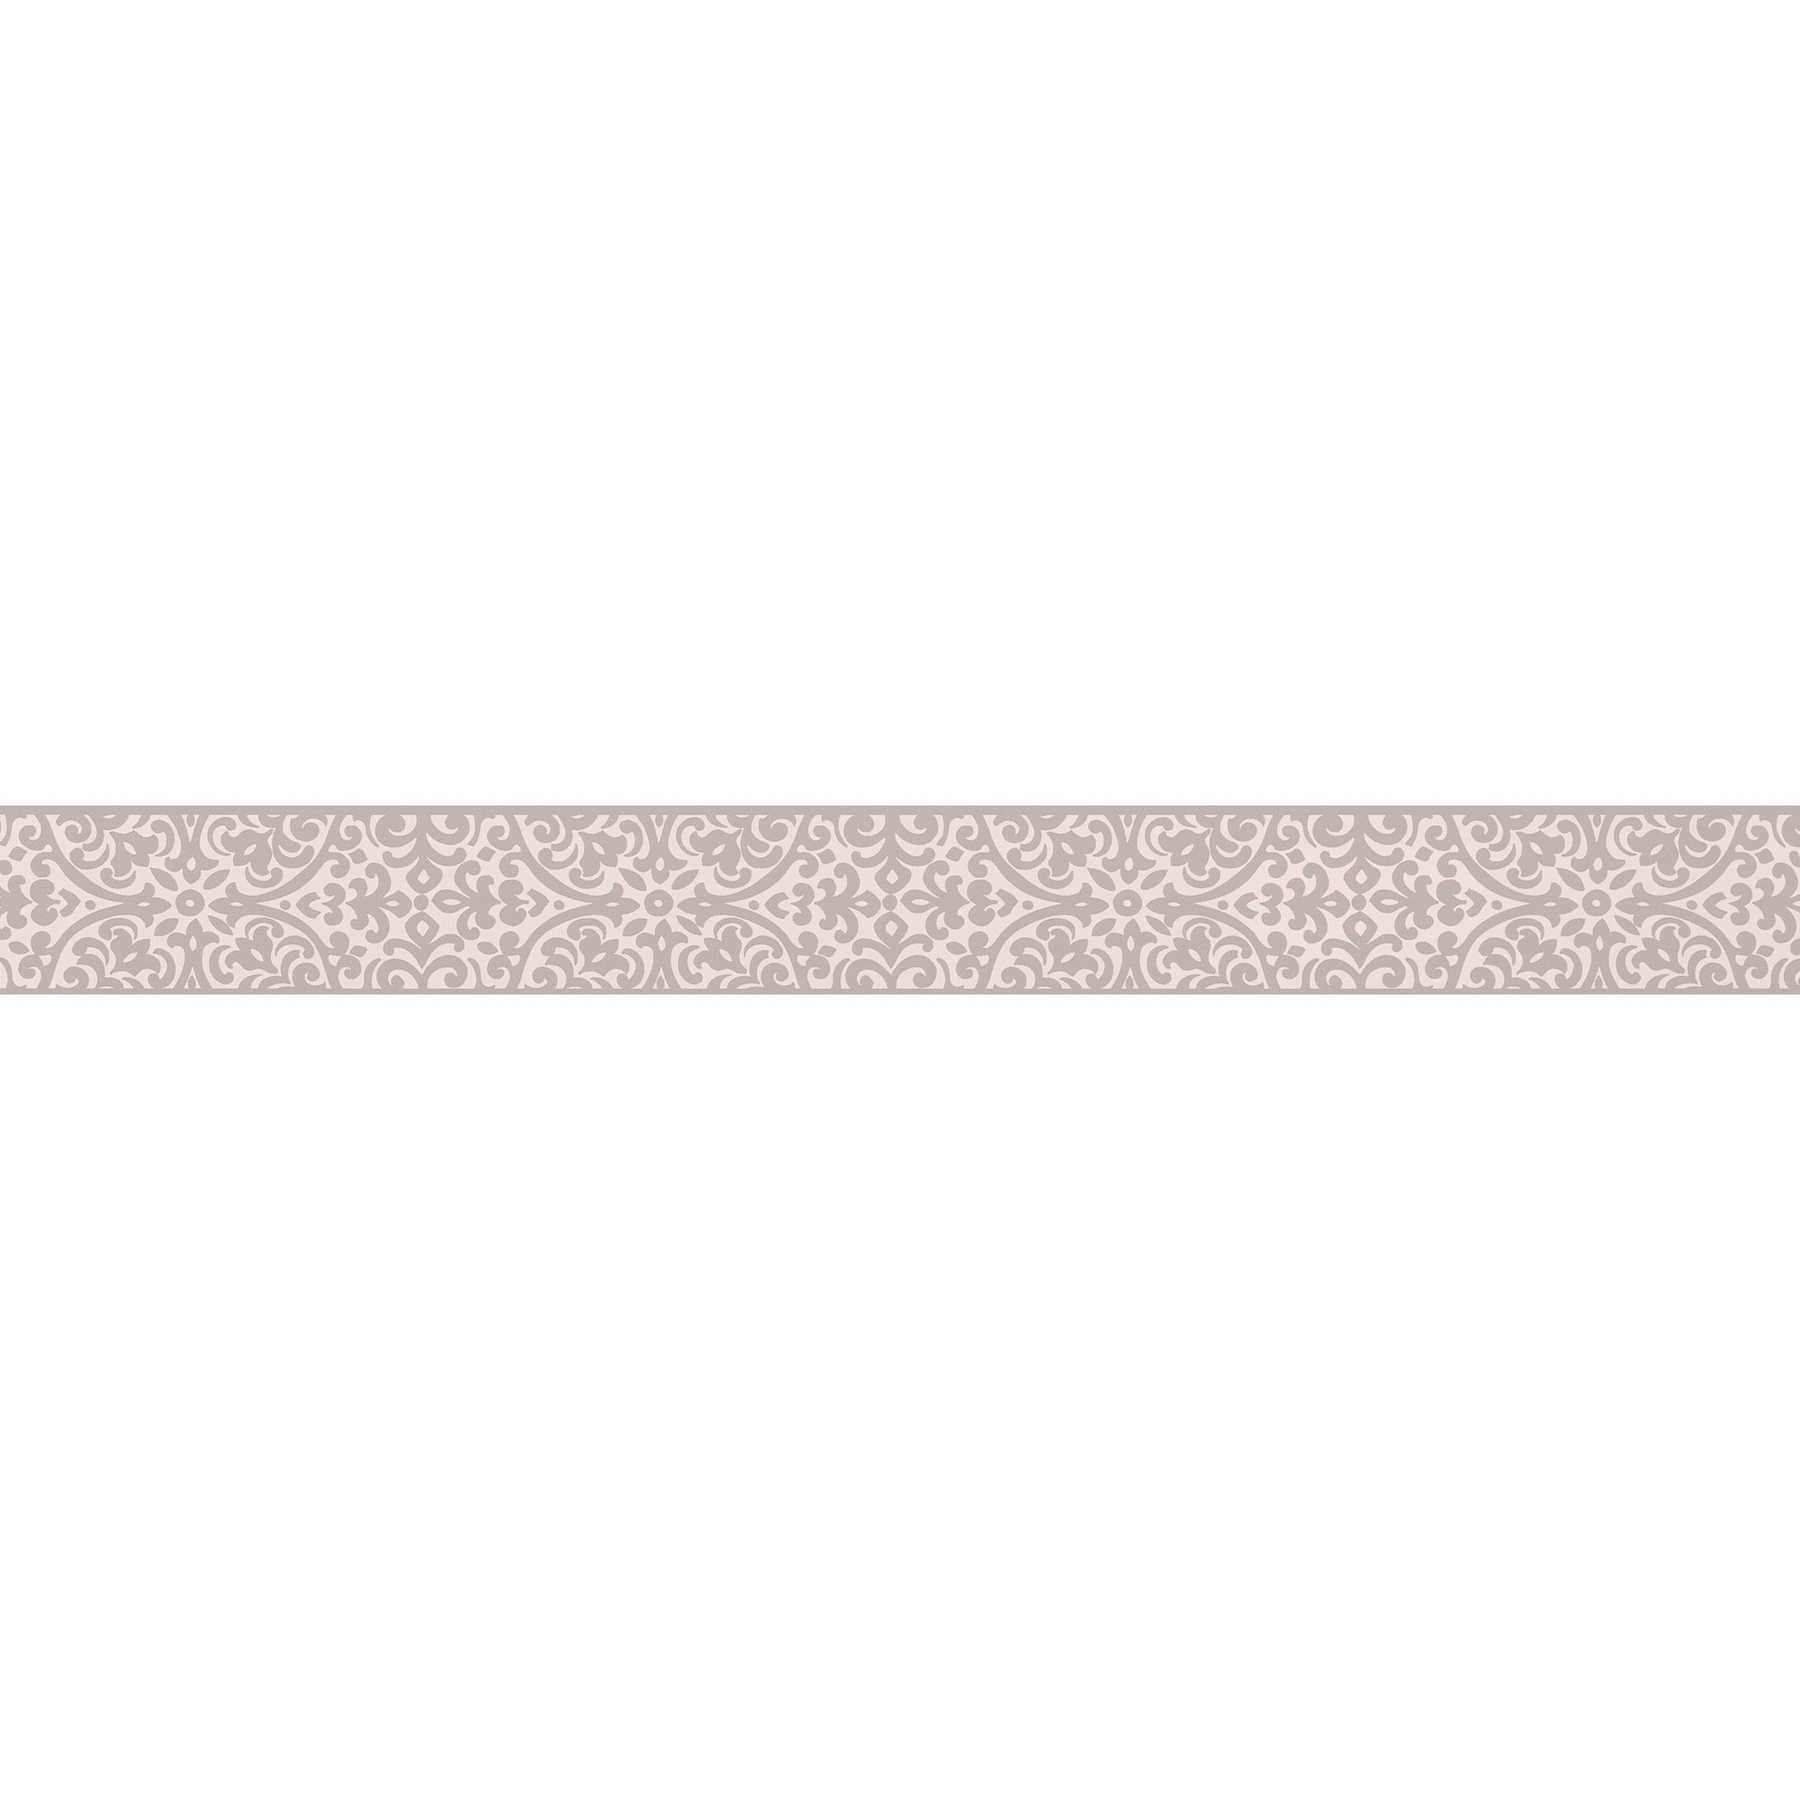         Wallpaper border with ornamental pattern - beige, brown, grey
    